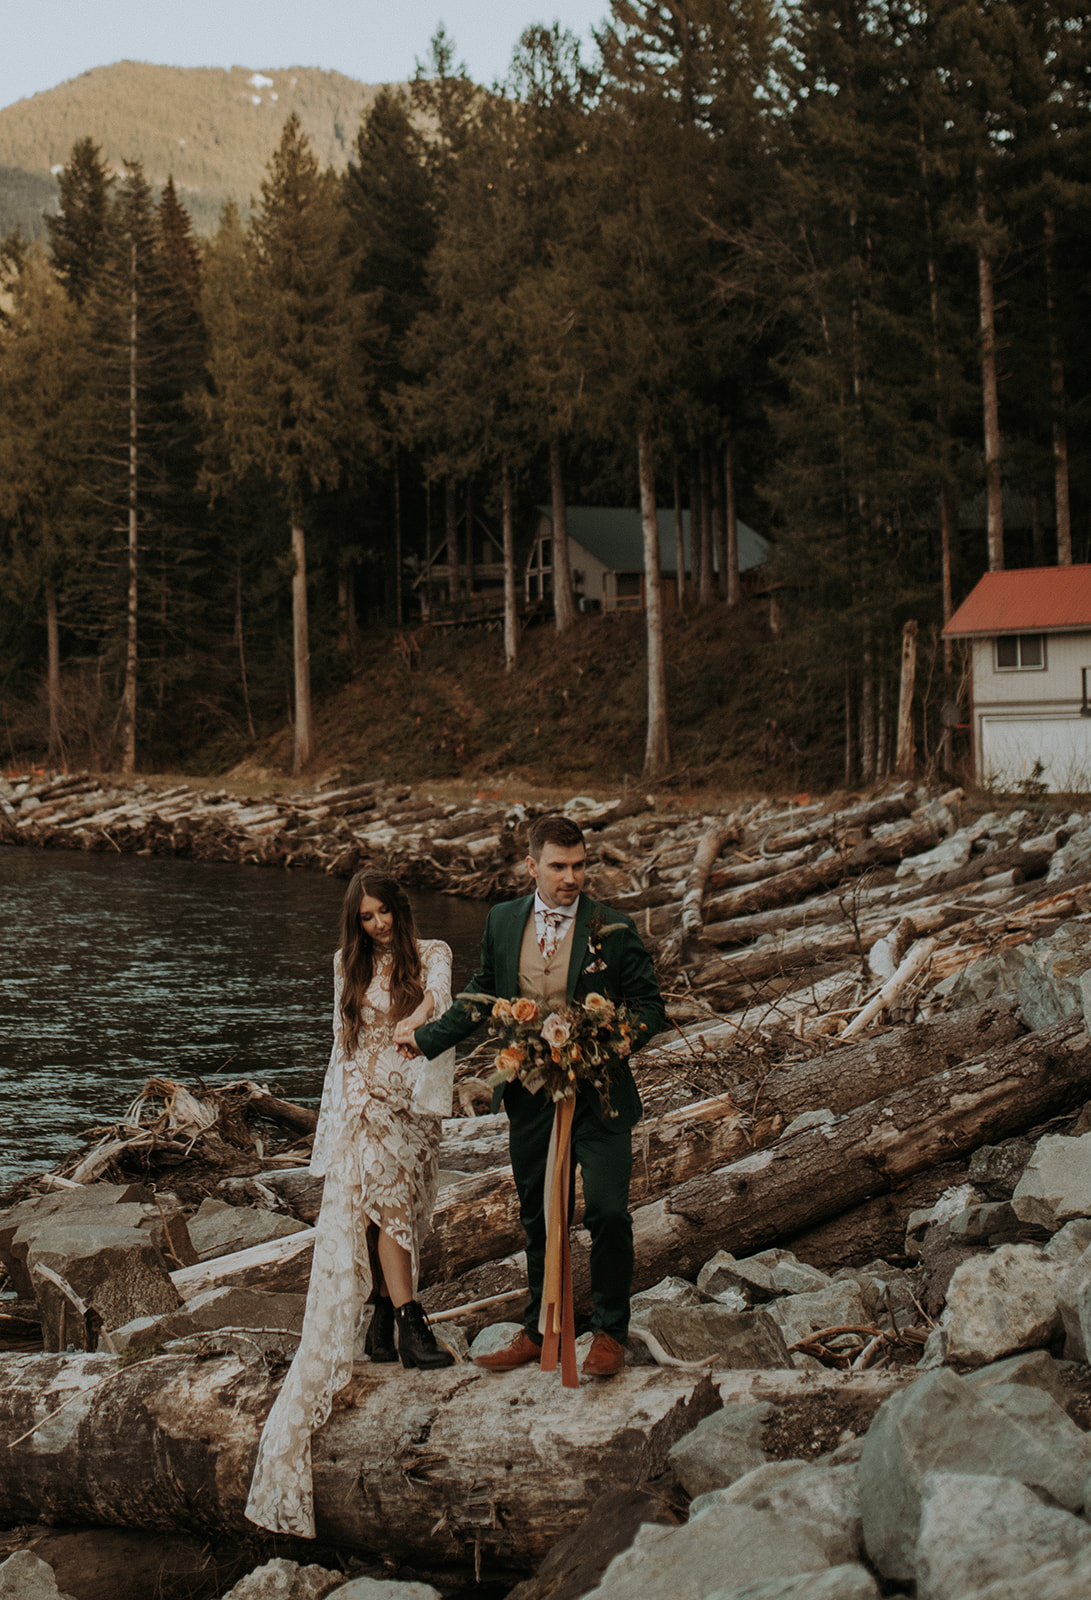 Mount Rainier elopement photographer captures intimate moment at cozy a-frame cabin, Woodsy wedding details, romantic